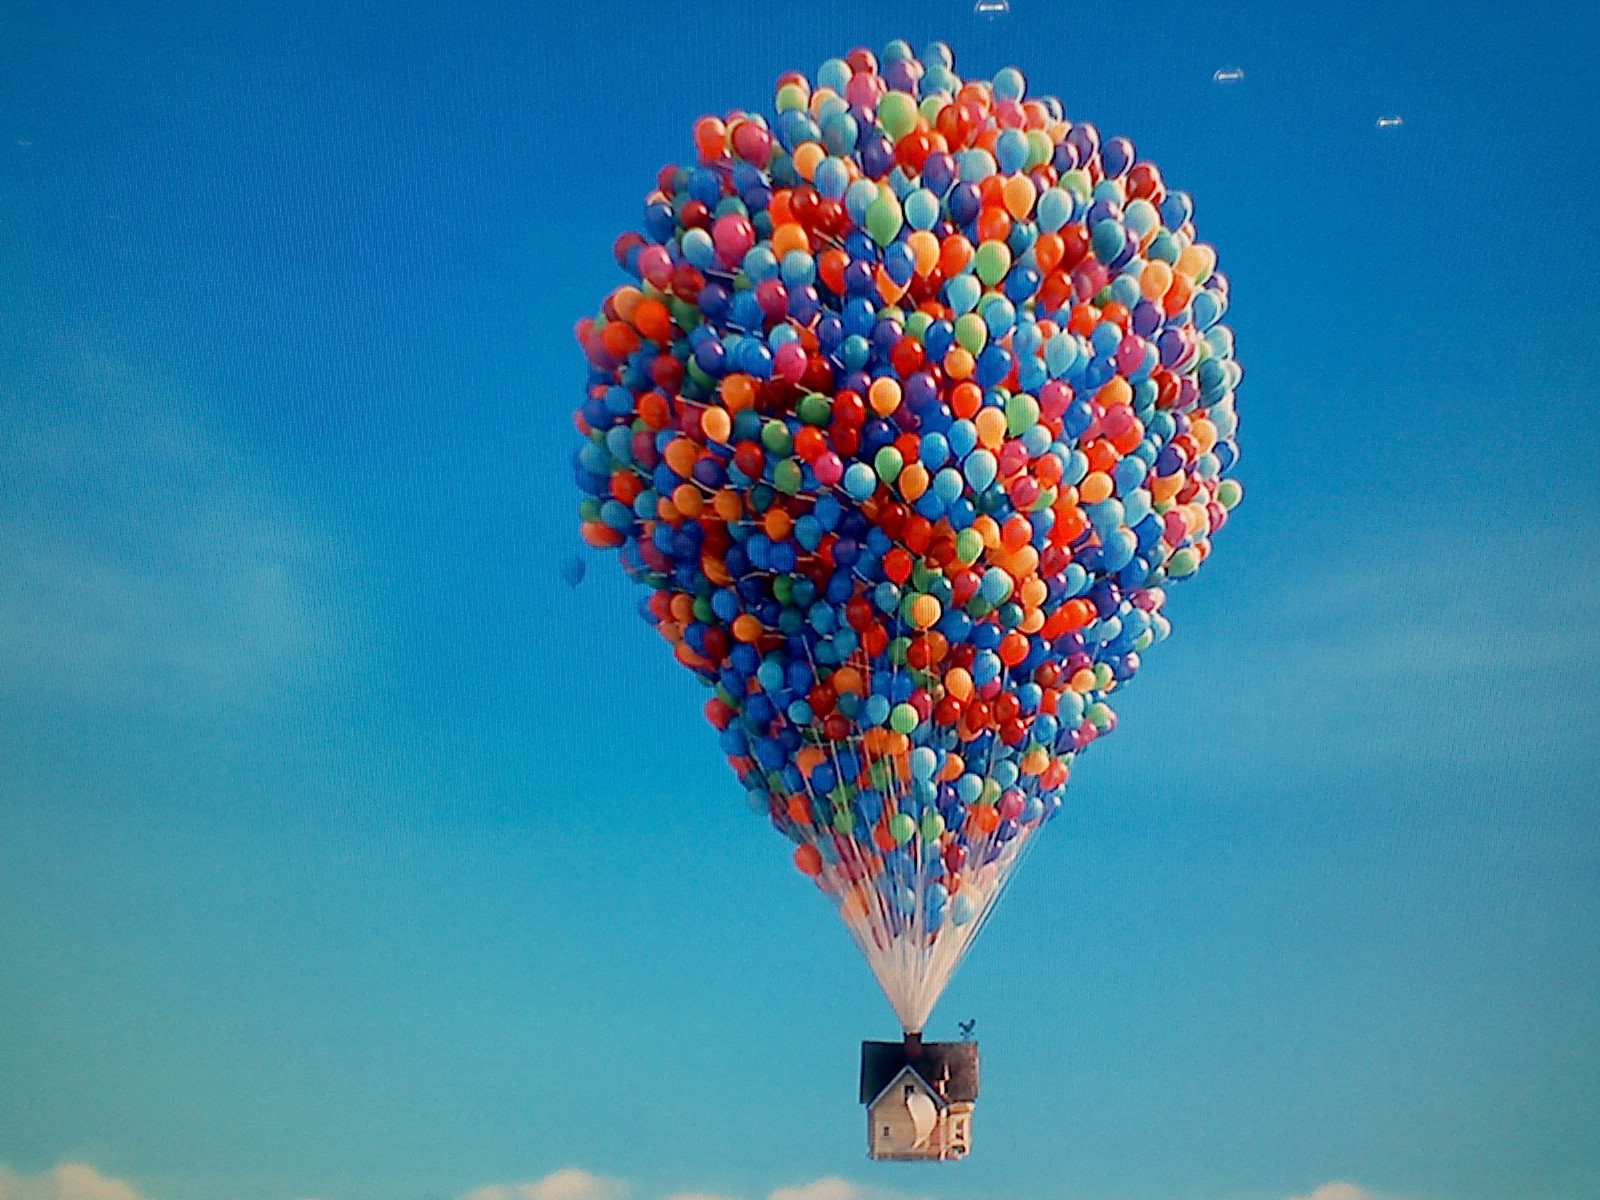 up wallpaper hd,hot air ballooning,hot air balloon,sky,air sports,balloon